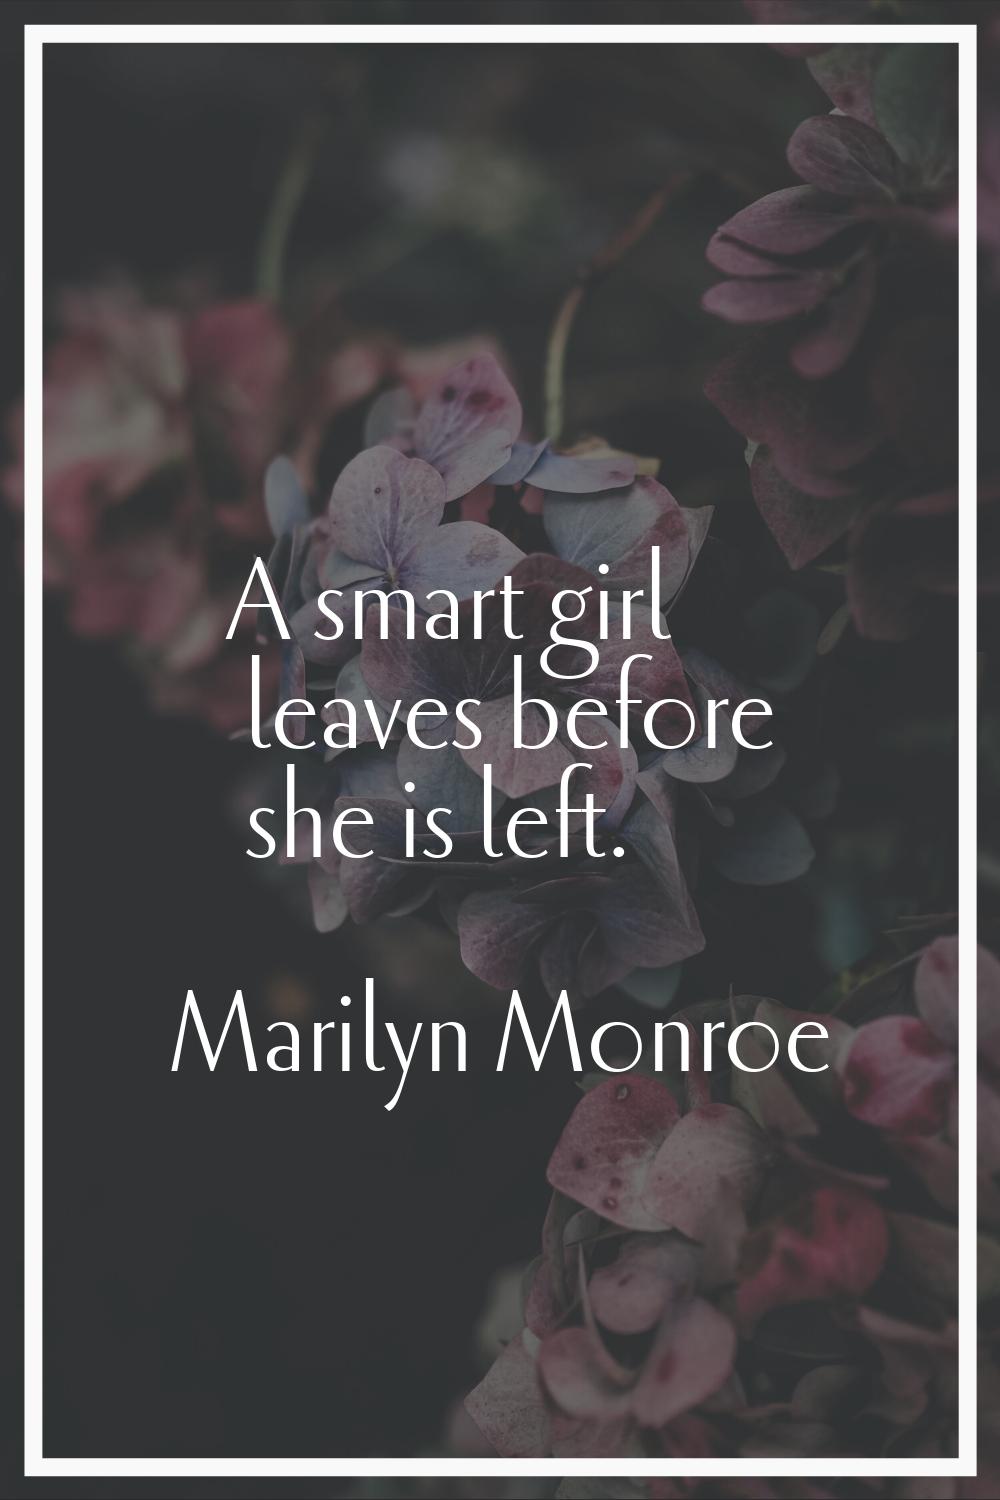 A smart girl leaves before she is left.